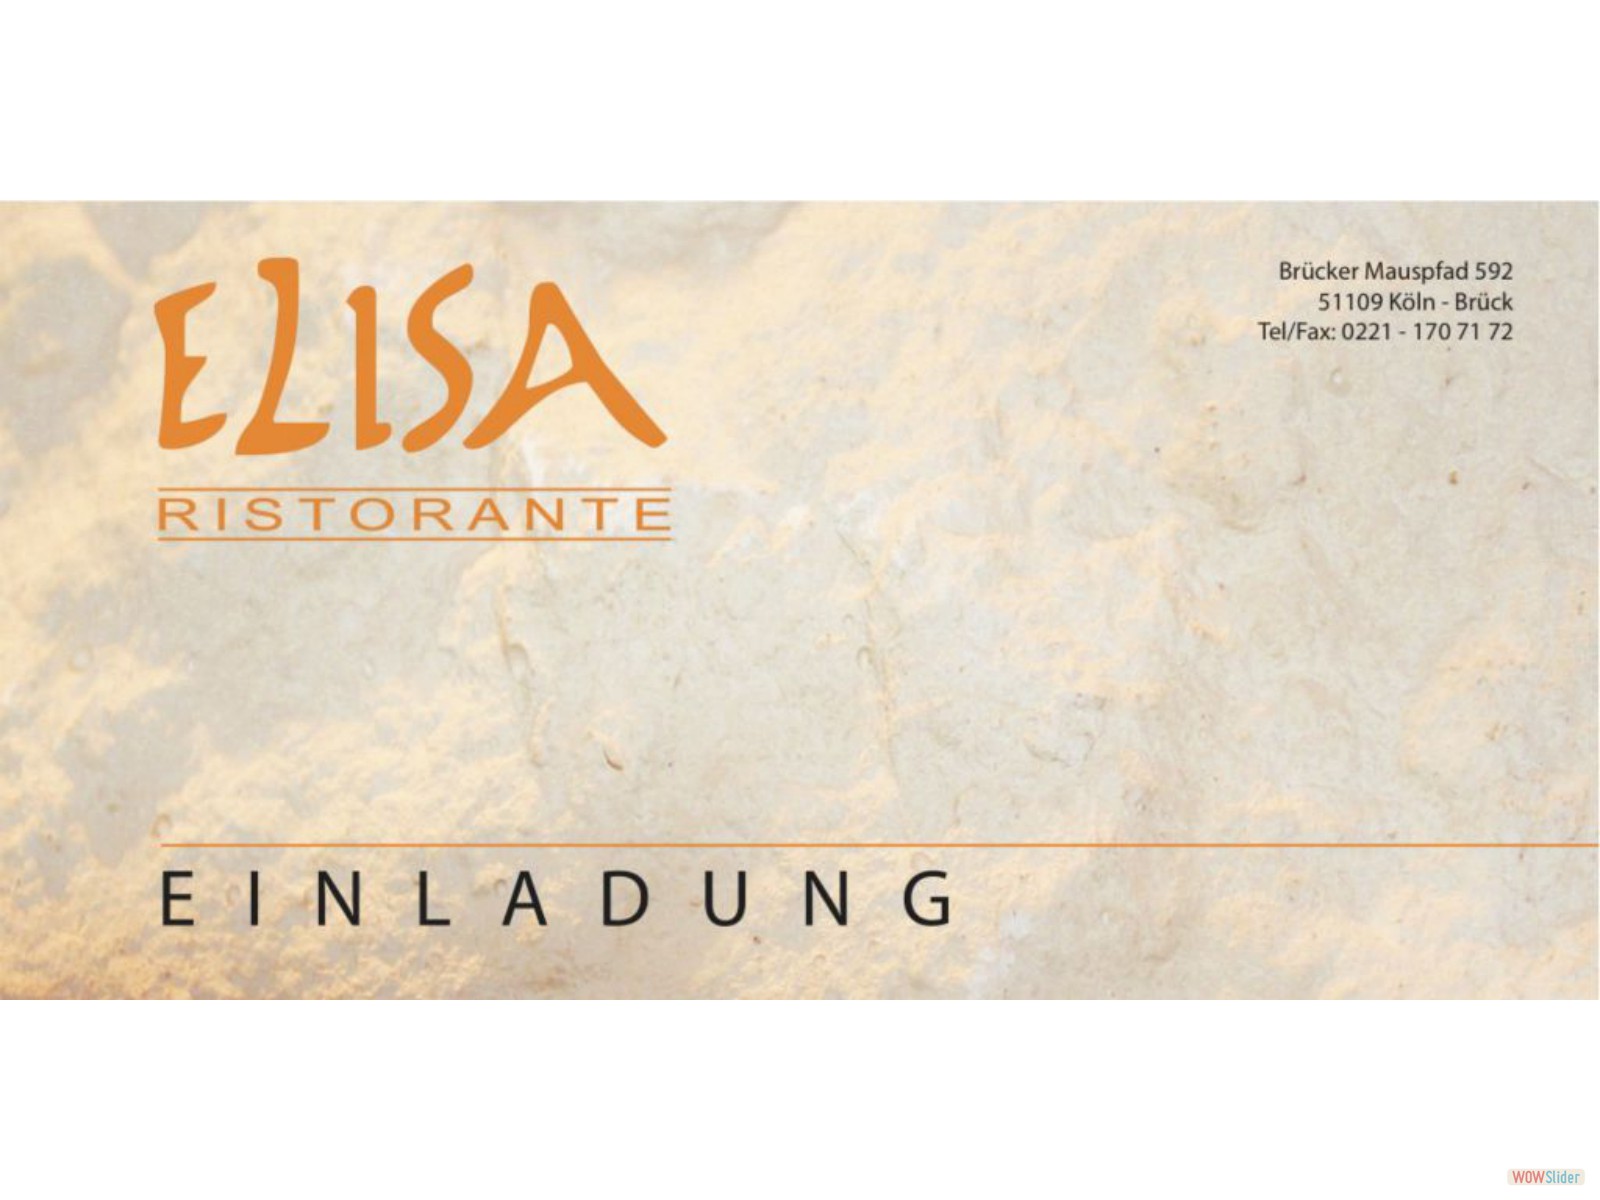 Elisa_Einladung_DinLang_back